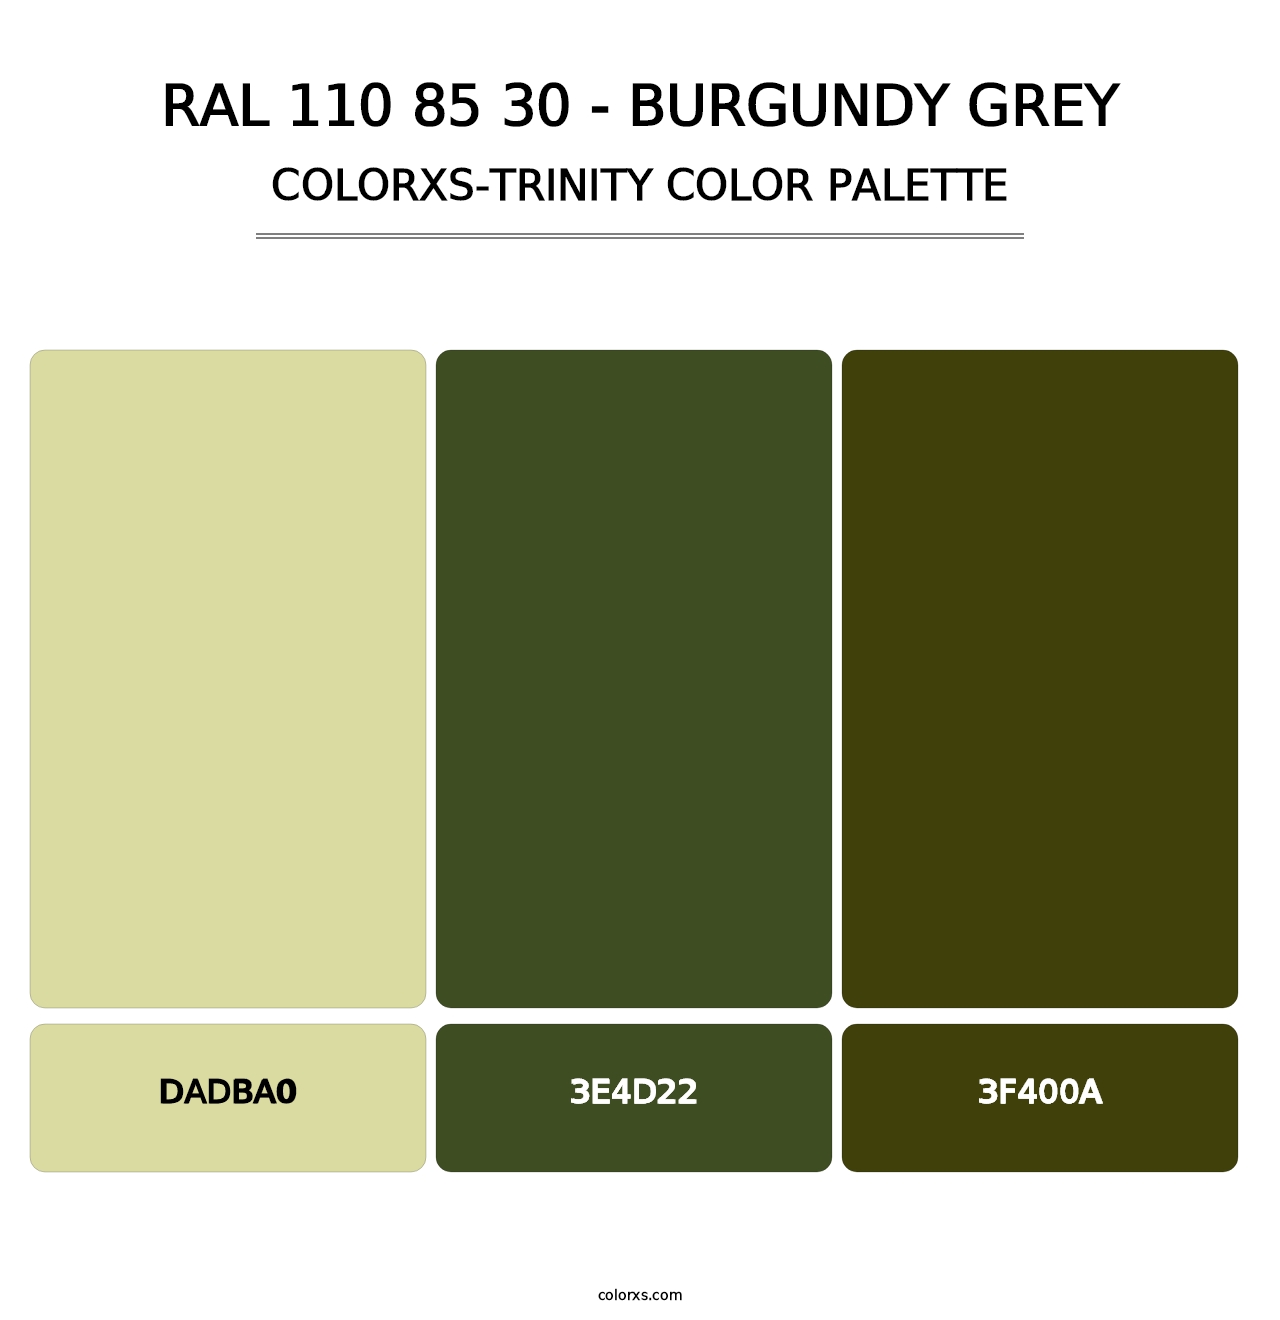 RAL 110 85 30 - Burgundy Grey - Colorxs Trinity Palette